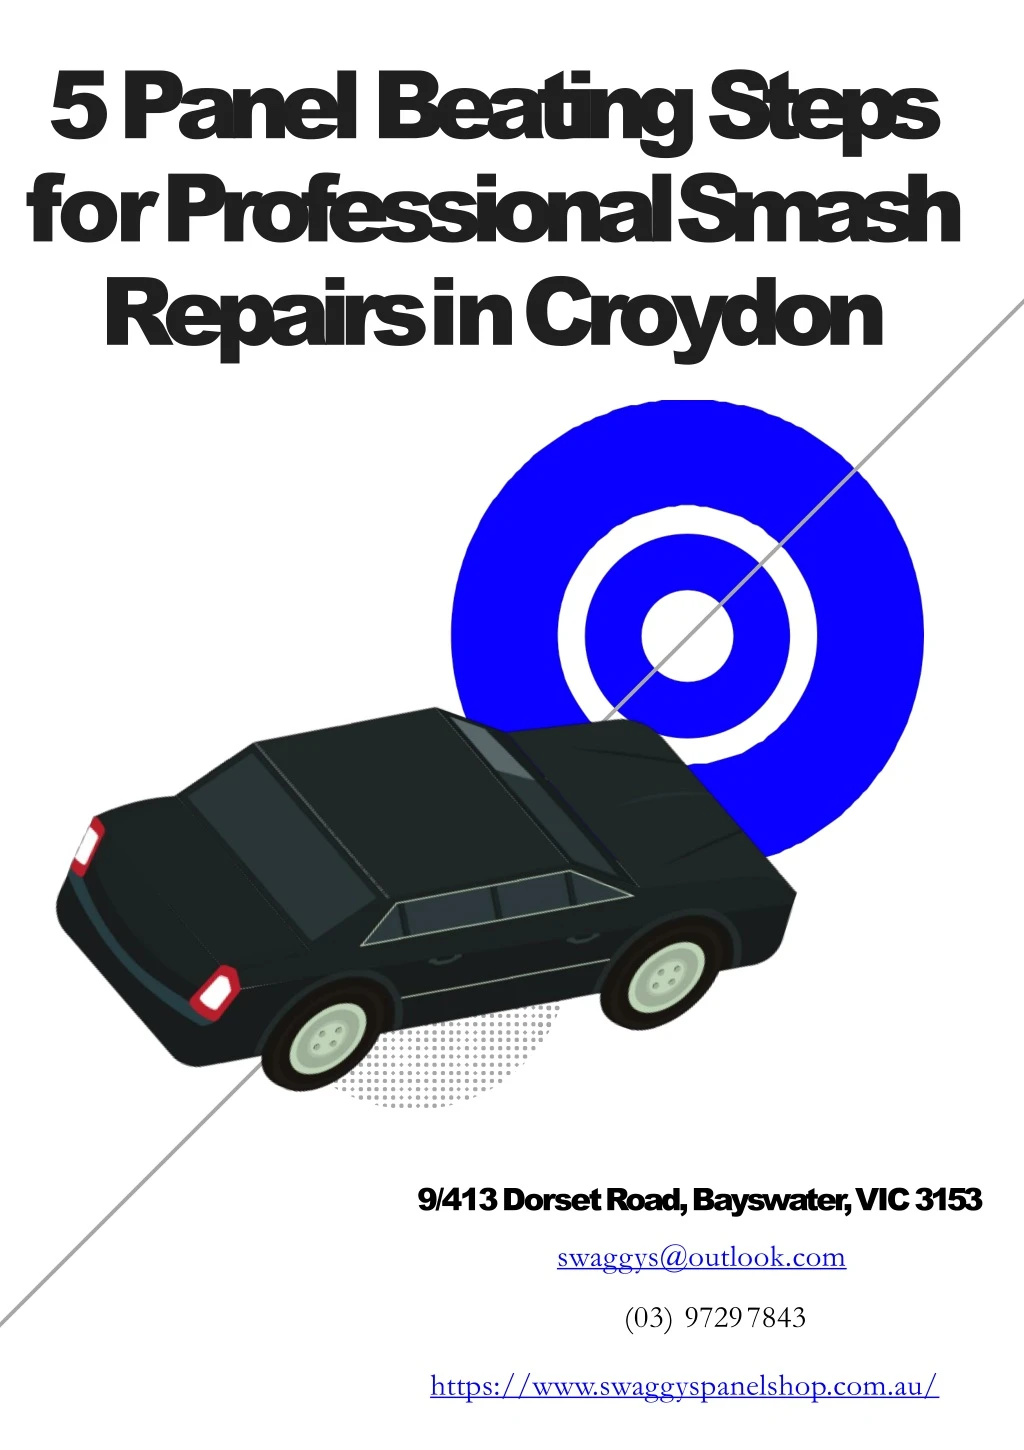 5 panel beating steps for professional smash repairs in croydon